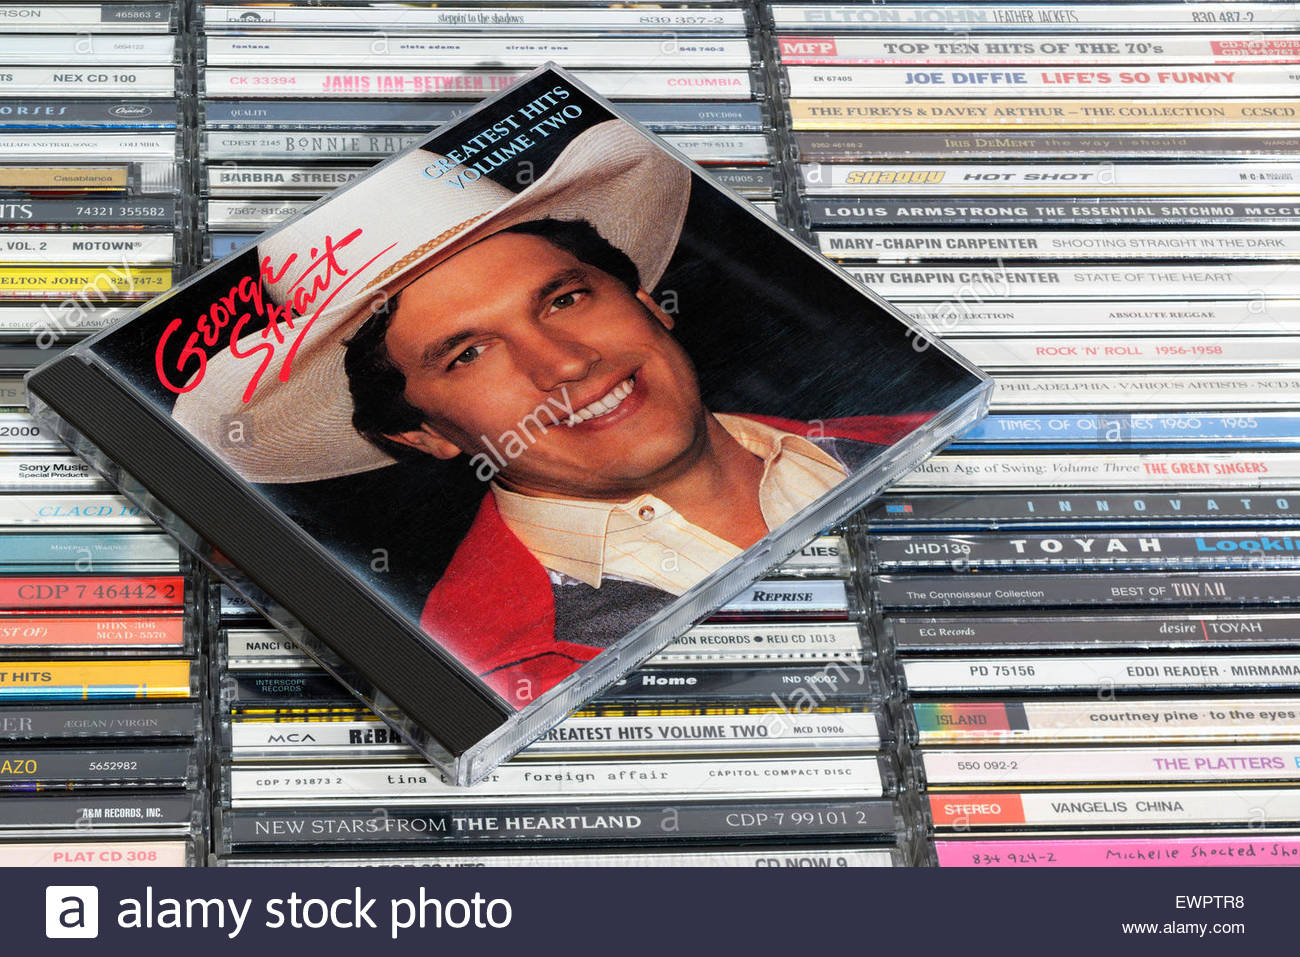 george strait 50 greatest hits cd